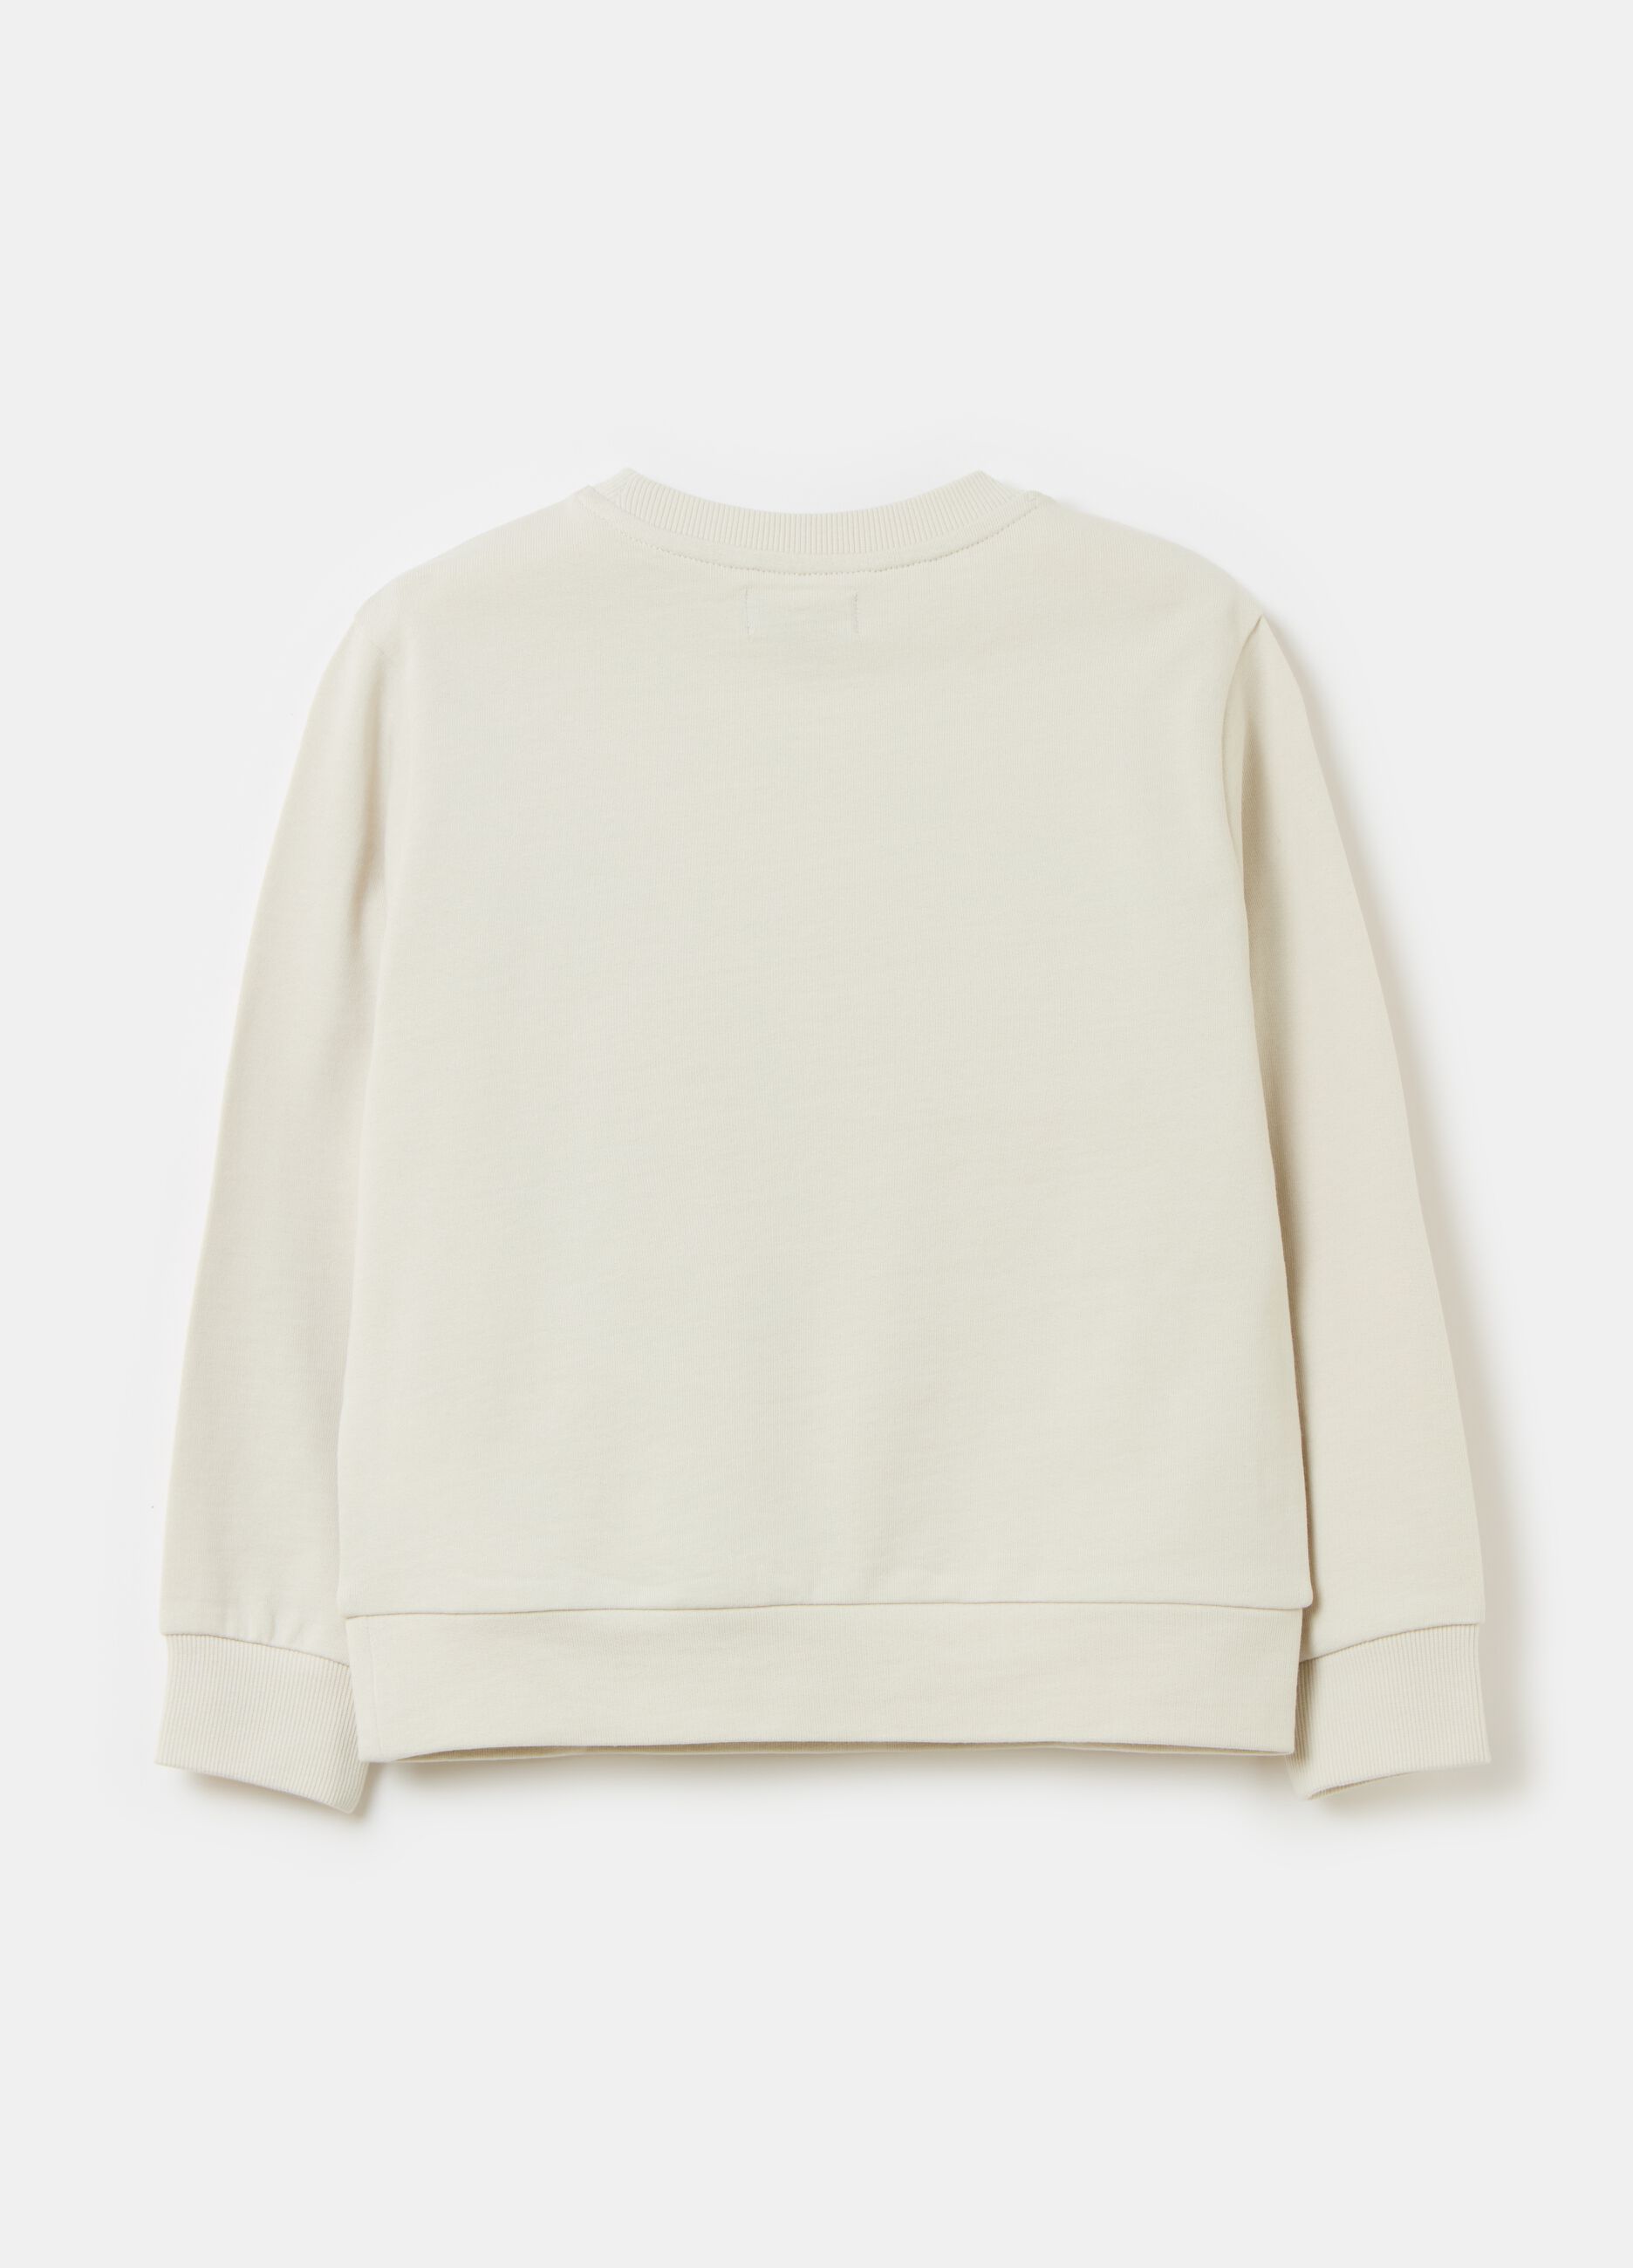 Sweatshirt in cotton with print